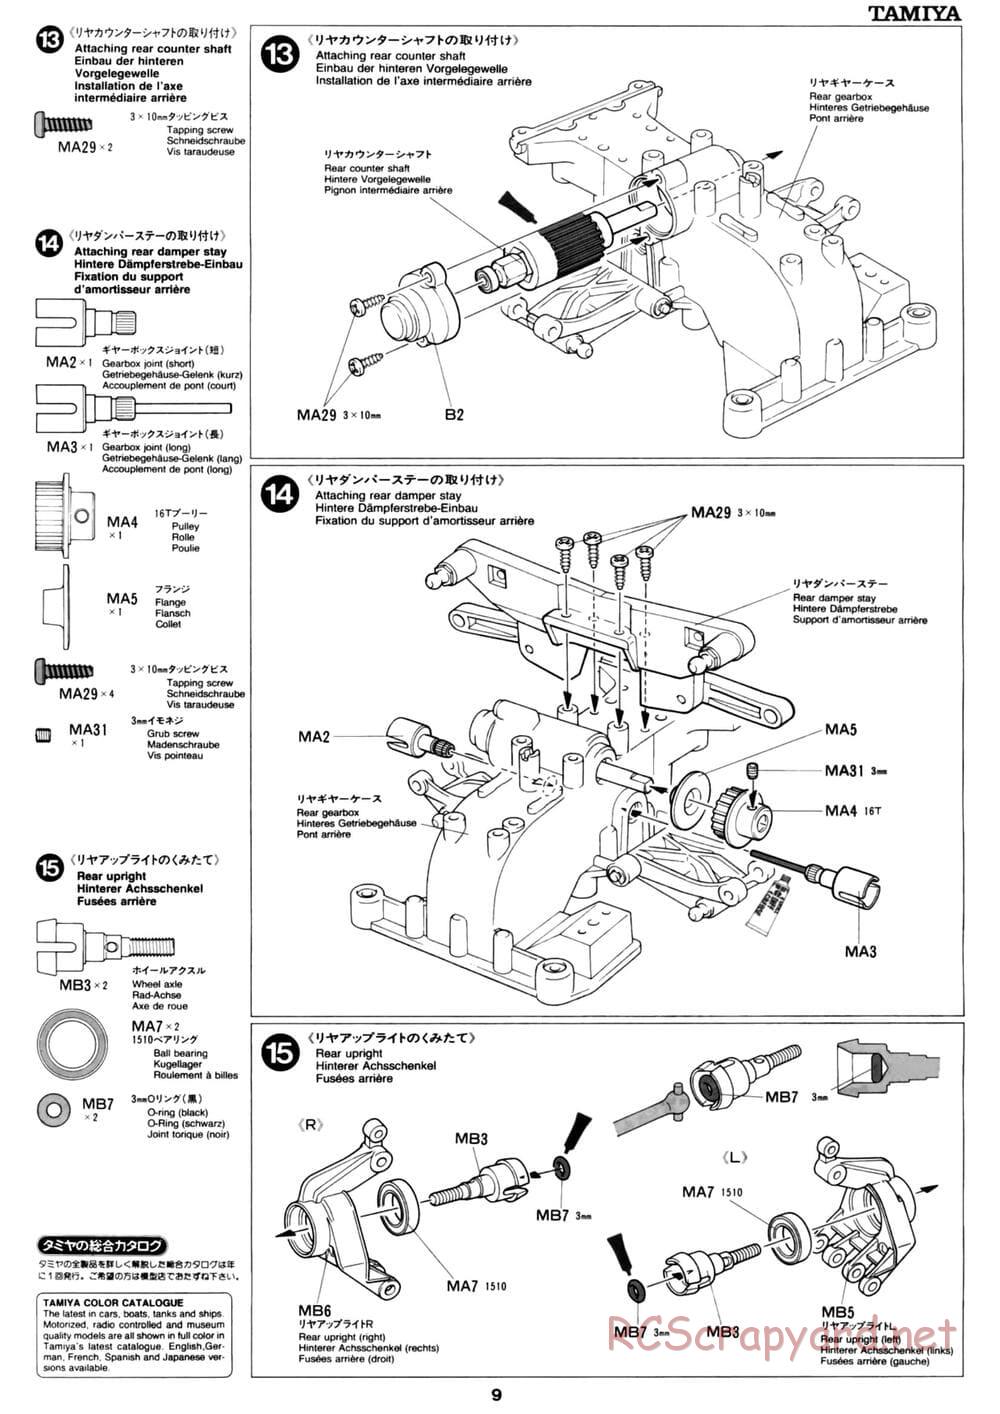 Tamiya - 58200 - Manual • David Jun TA03F Pro Chassis • RCScrapyard ...